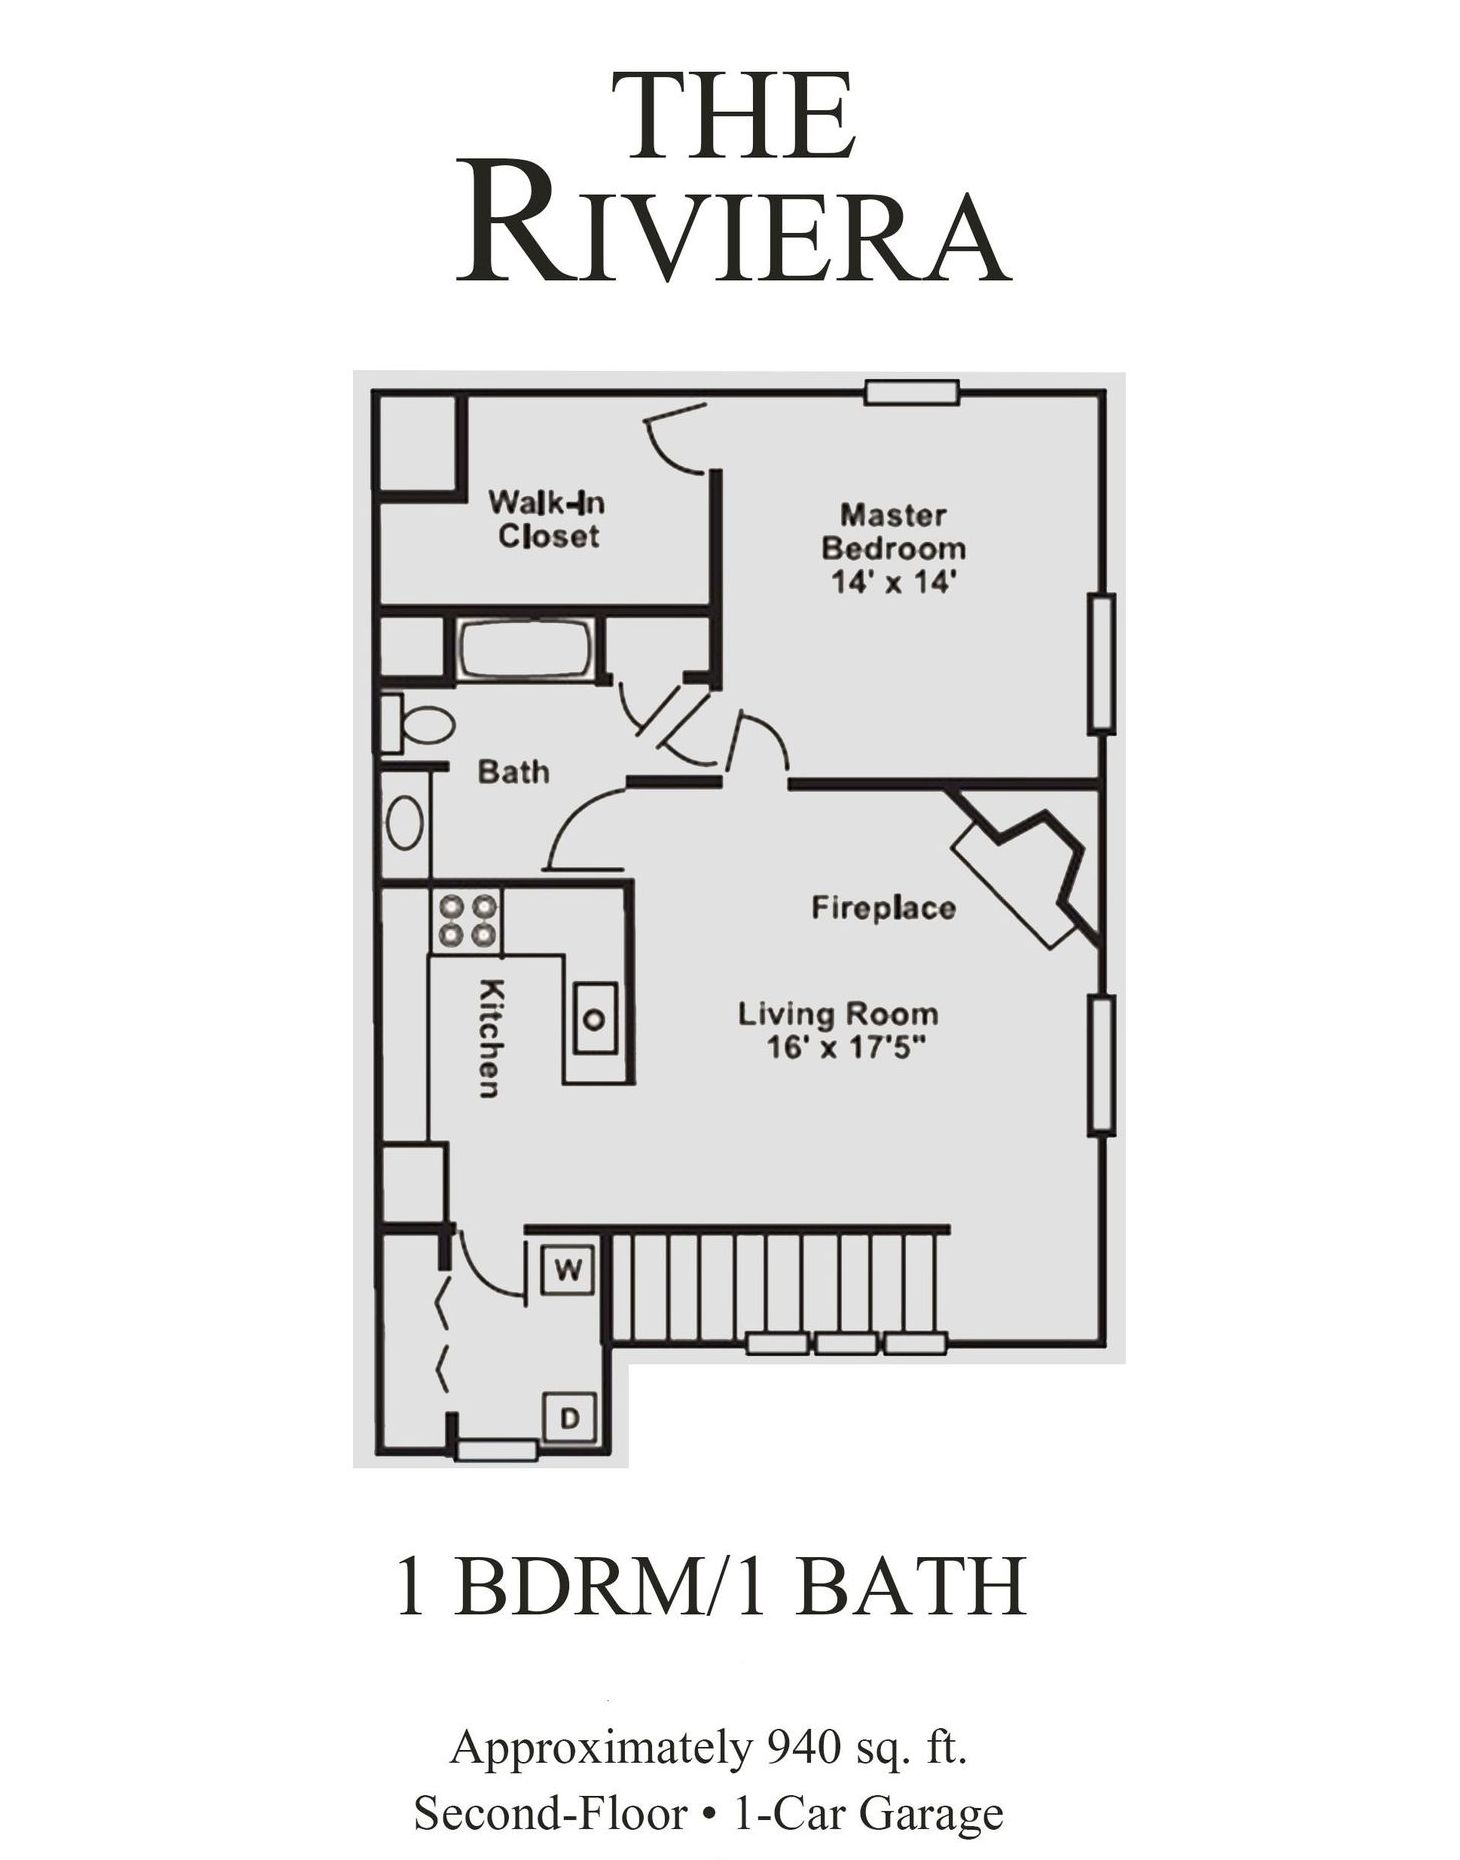 Riviera floor plan drawing